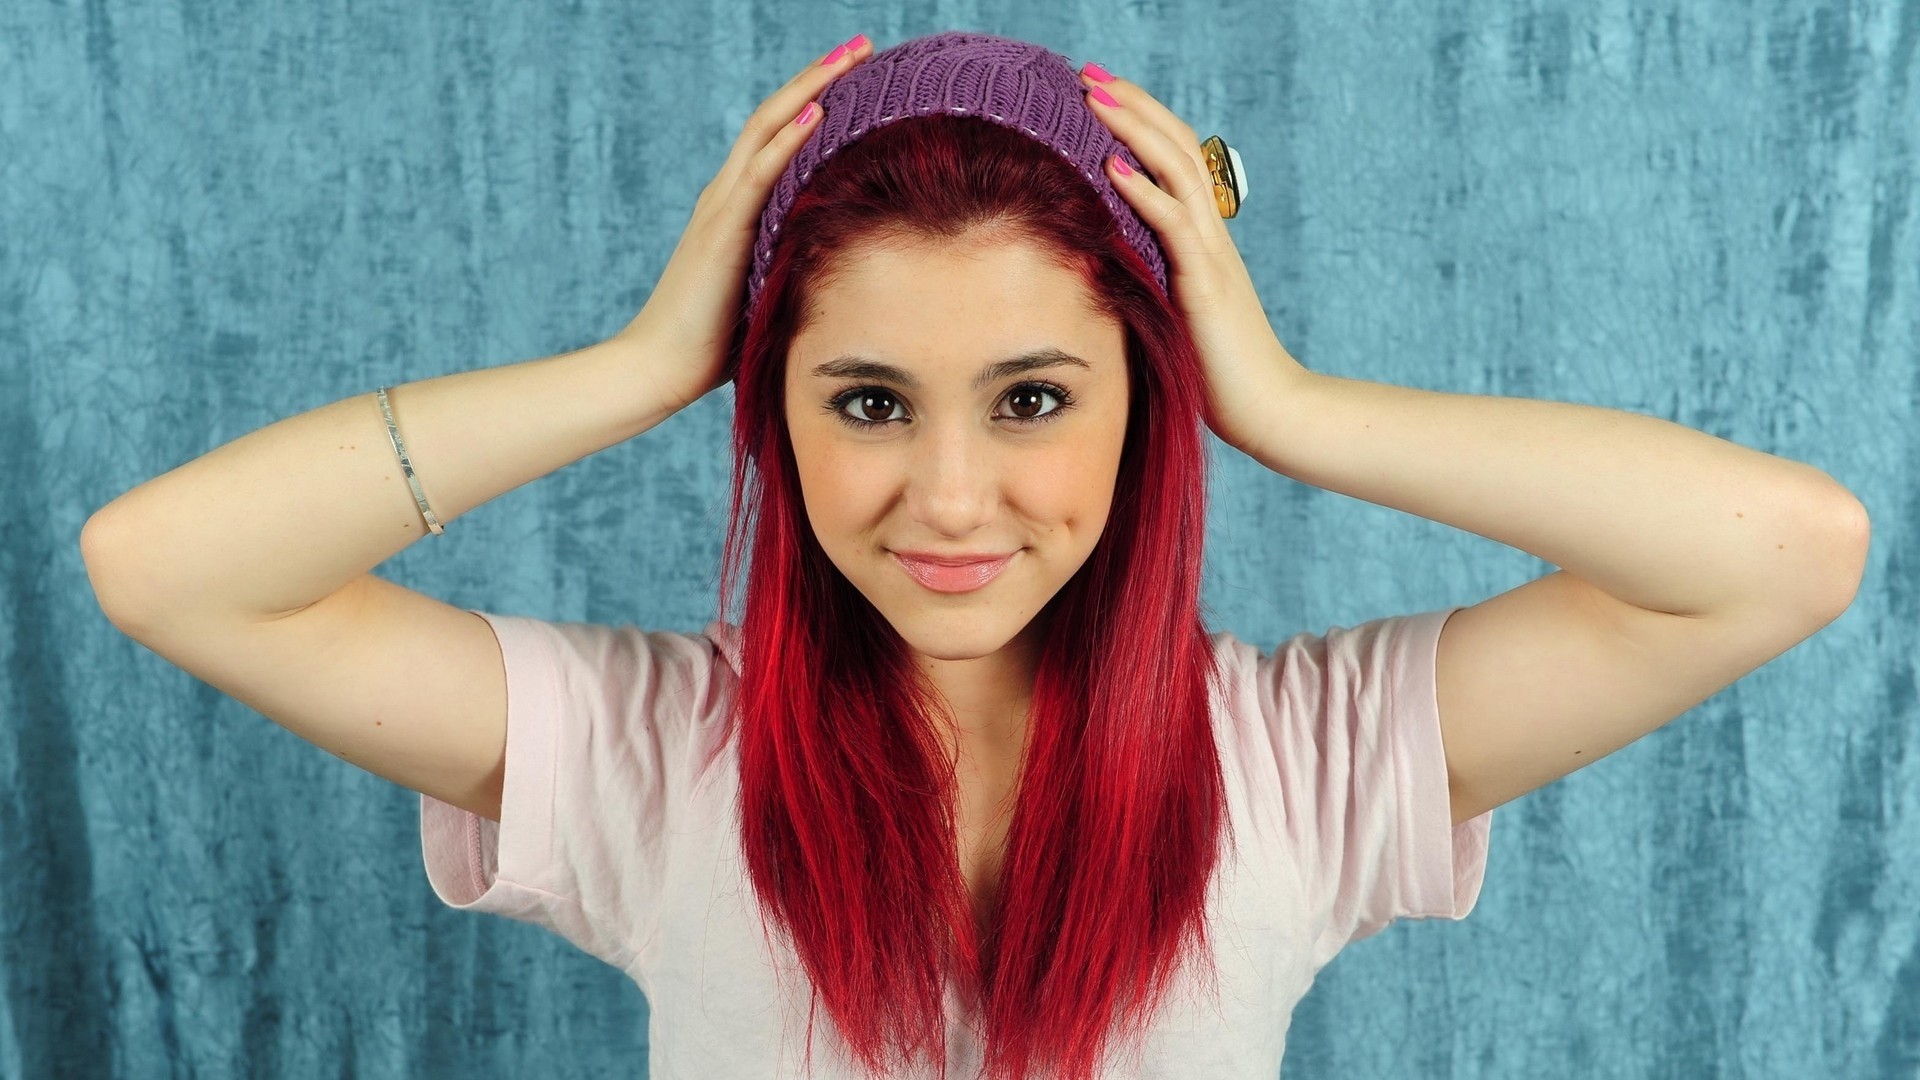 Ariana Grande Redhead Hands On Head Woolly Hat Women Brown Eyes Knit Hat Smiling 1920x1080